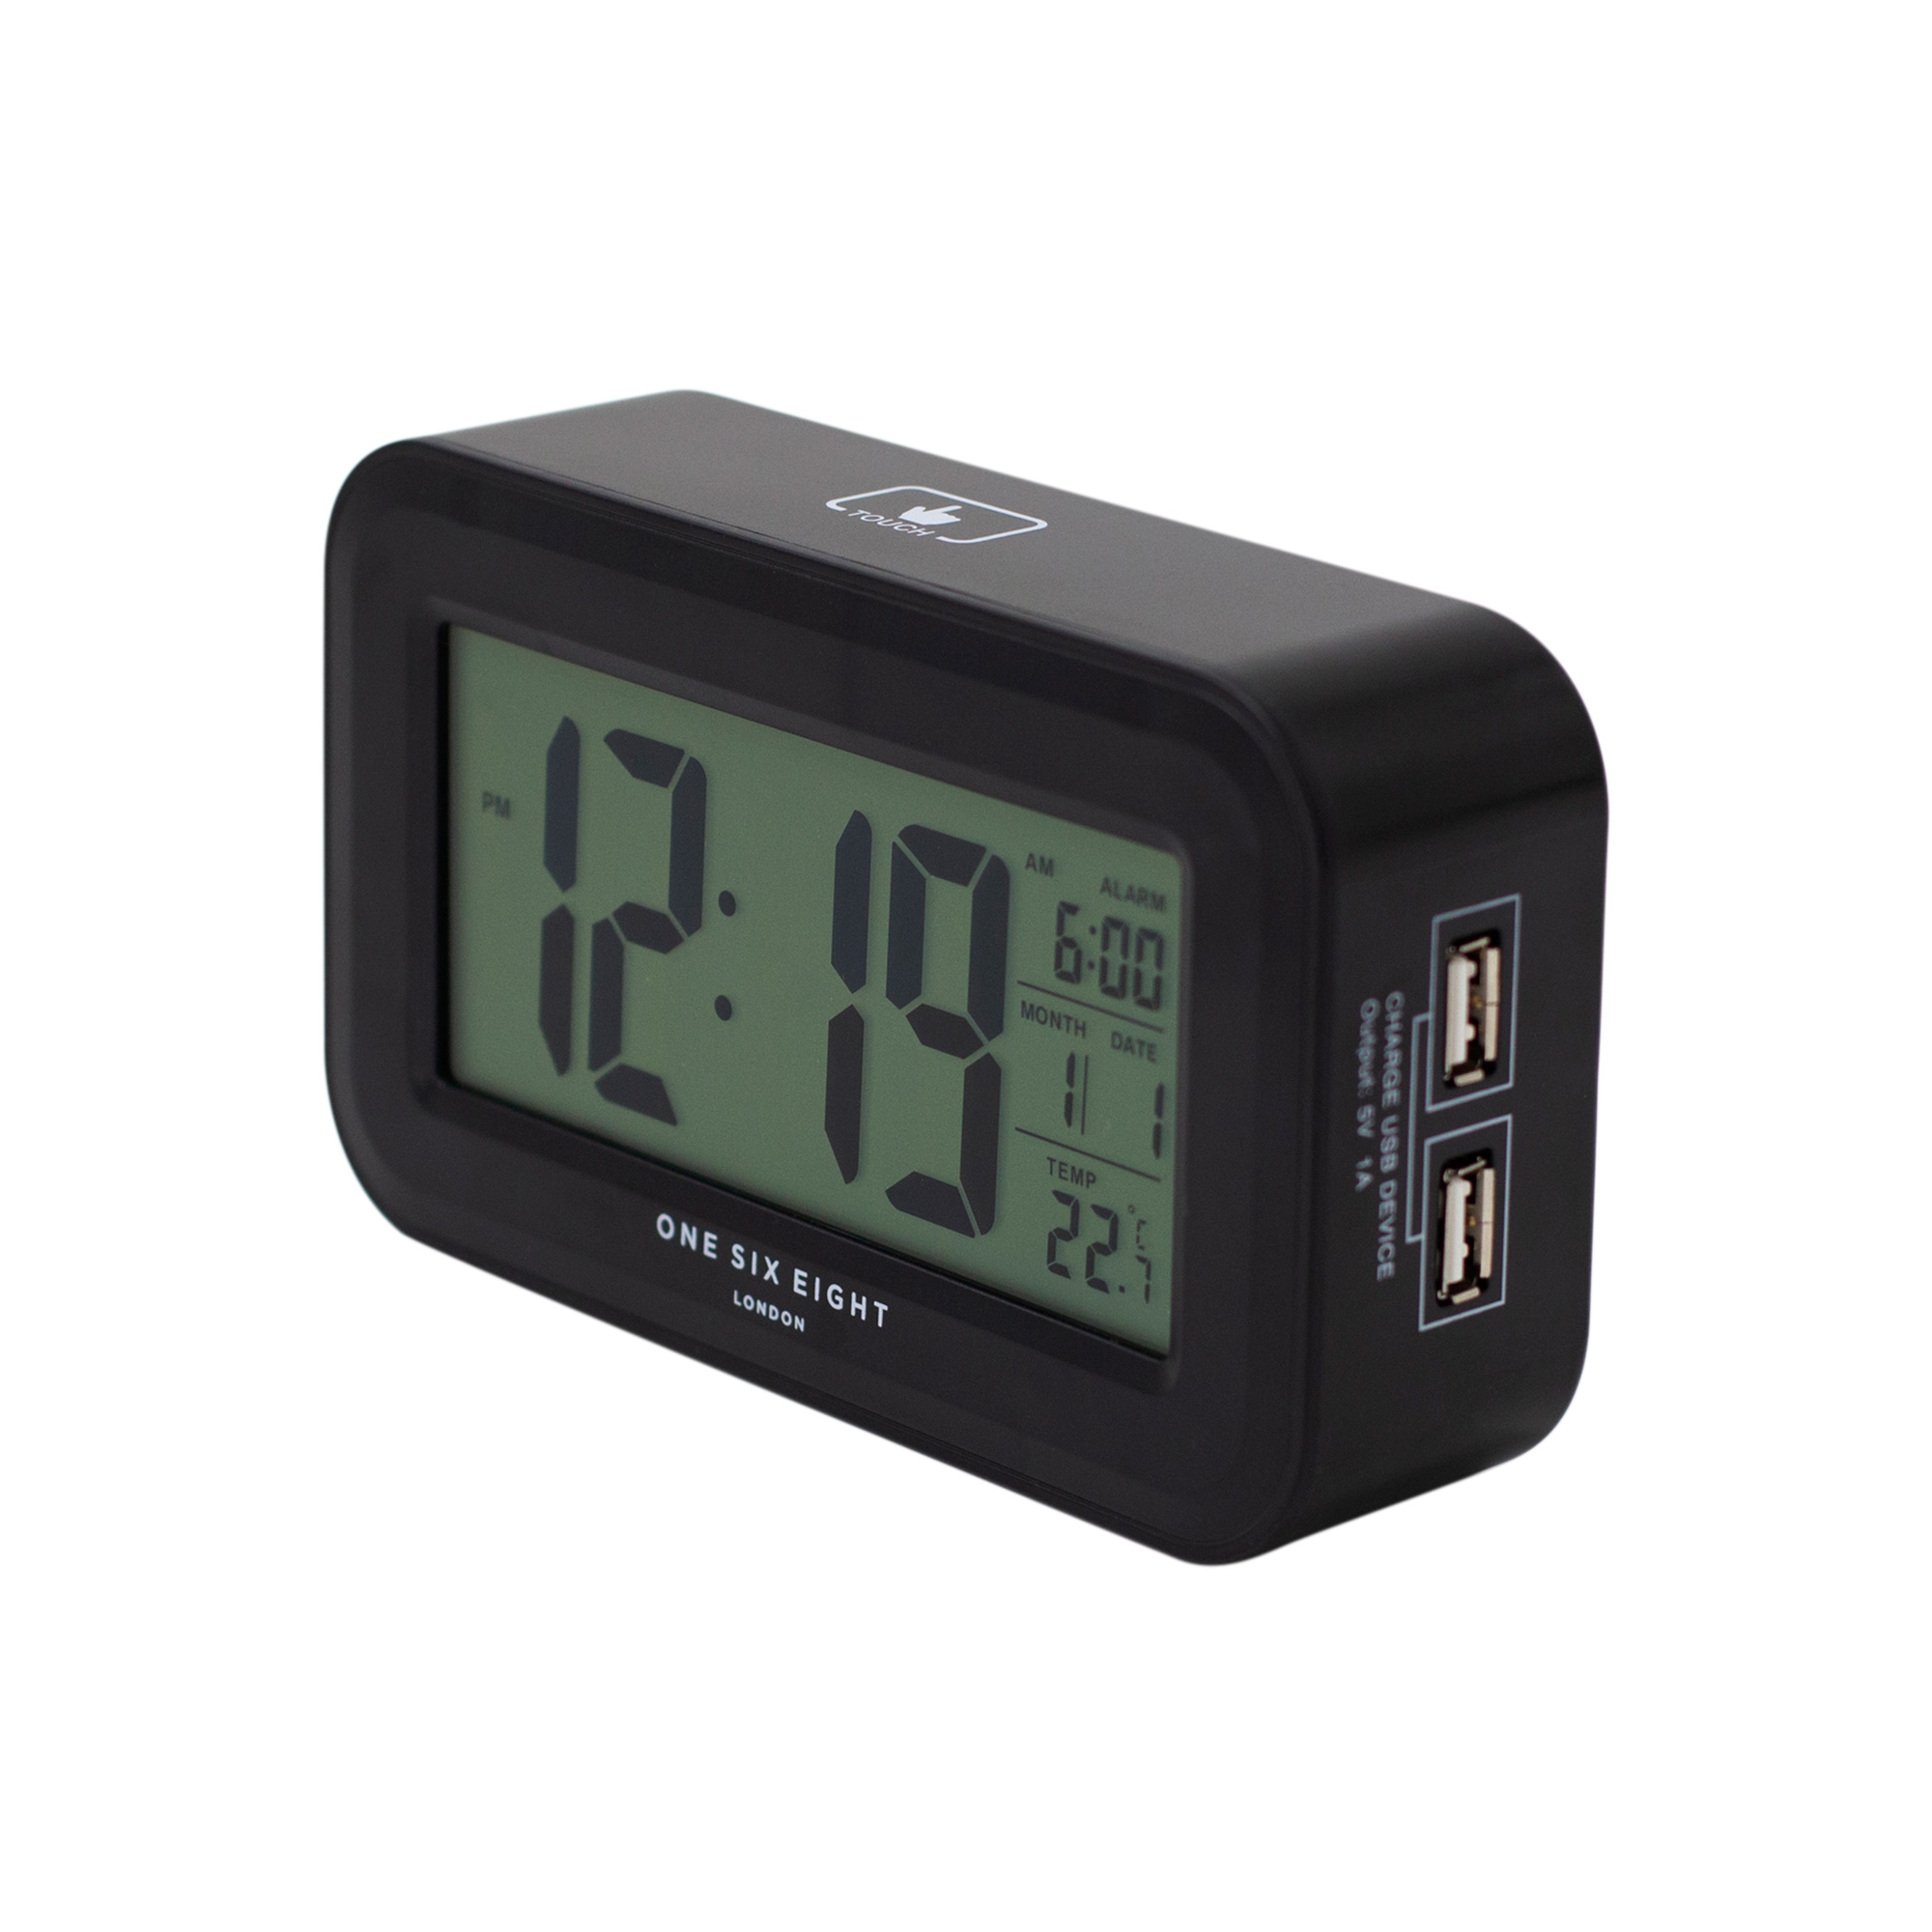 One Six Eight London Reilly Digital Alarm Clock Black Image 2